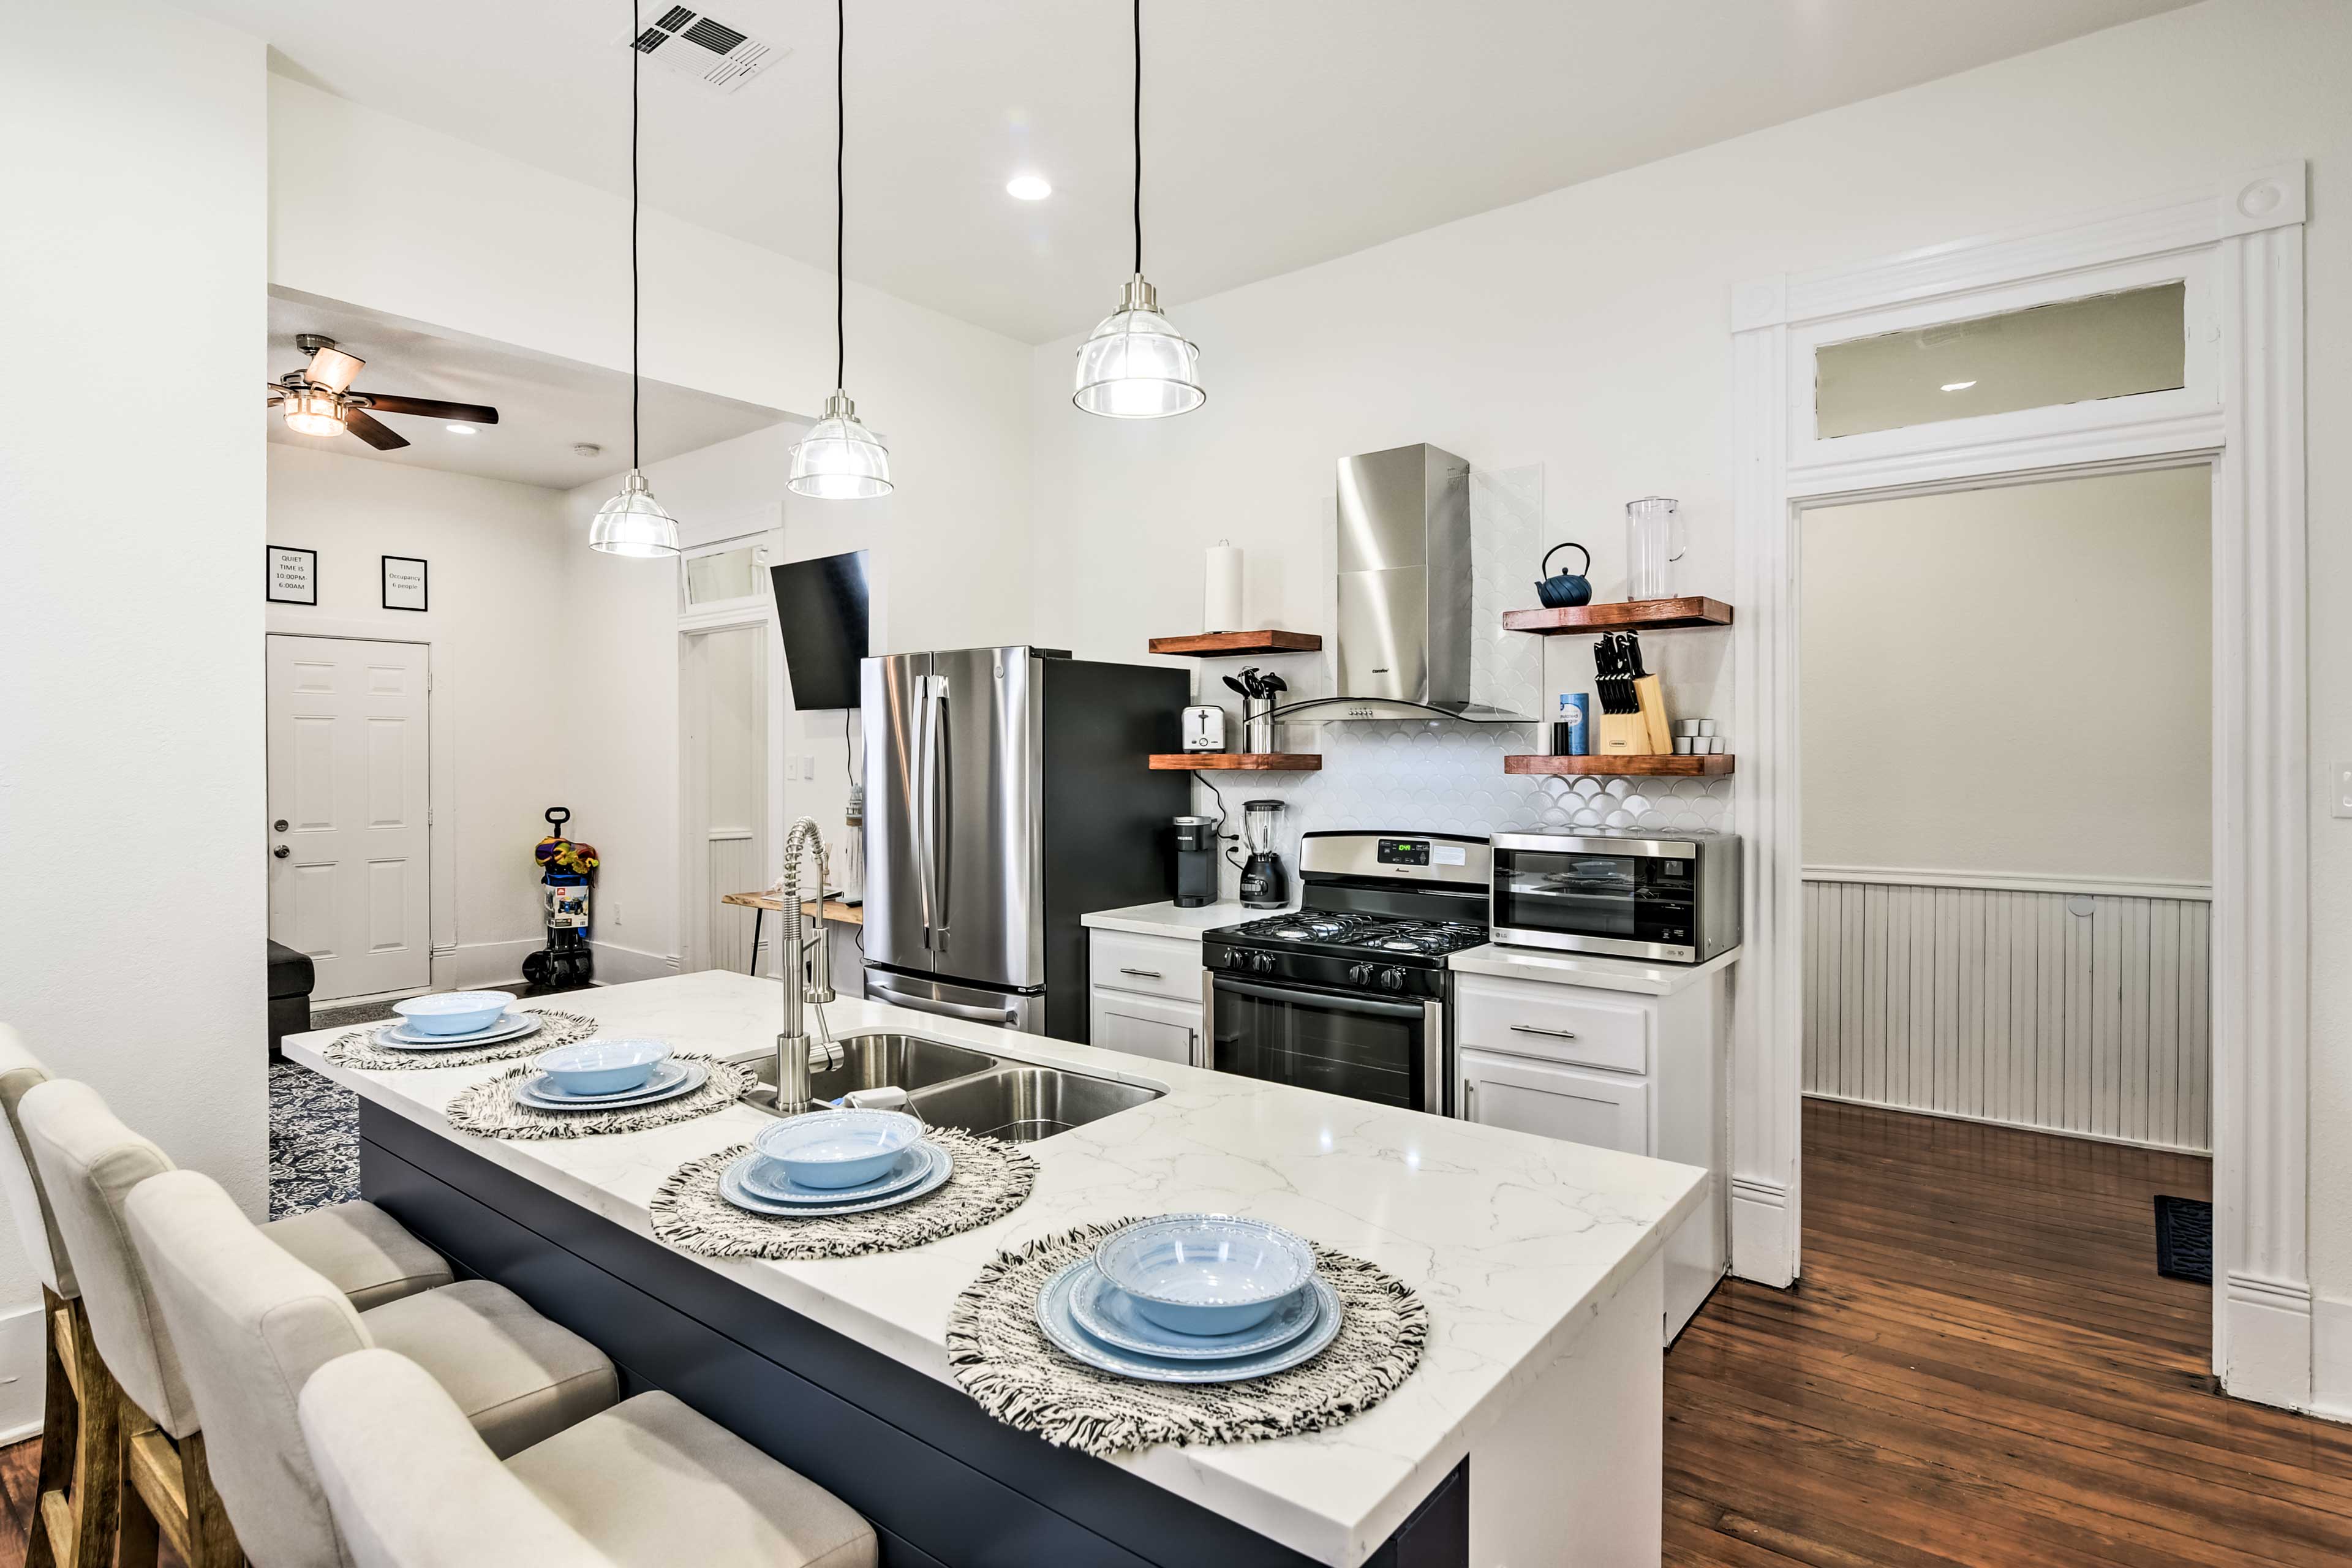 Kitchen | 2-Story Duplex | Additional Vacation Rental On-Site